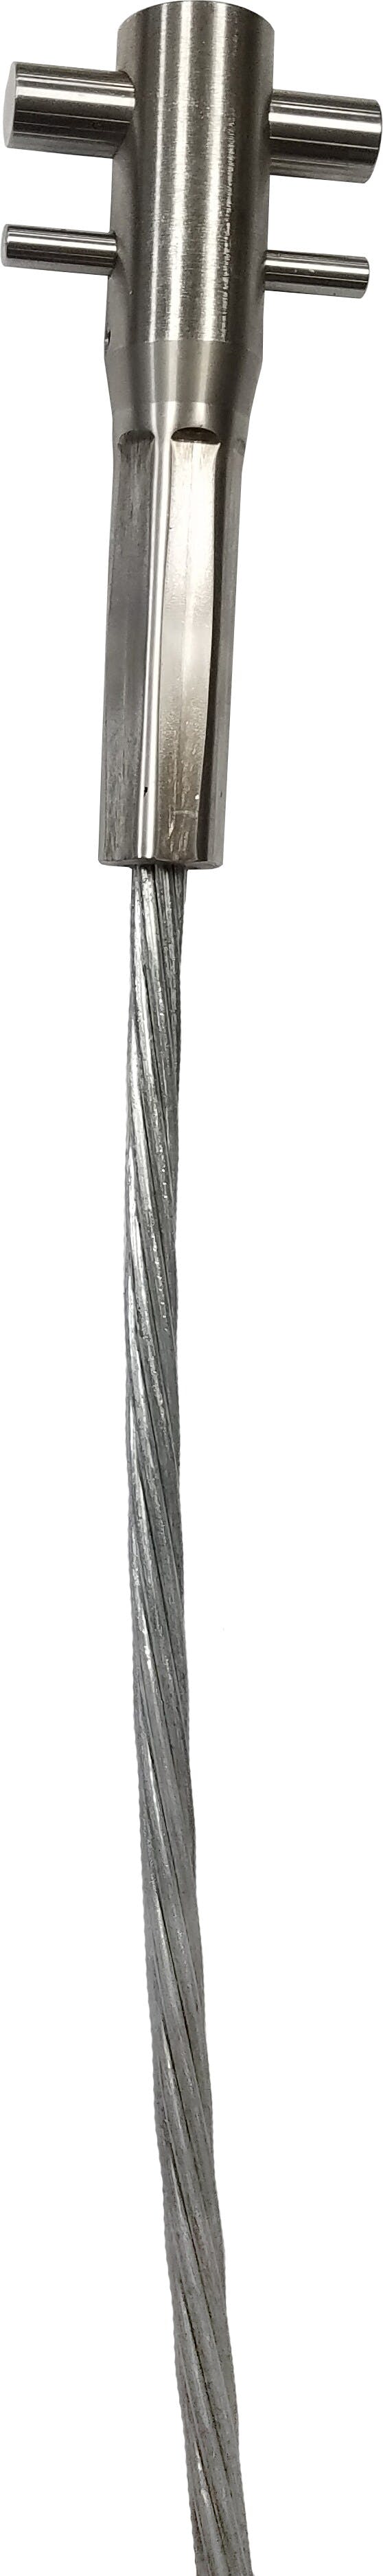 3M™ DBI-SALA® Lad-Saf™ Swaged Cable 6115025, 3/8 Inch, Galvanized Steel, 90 m